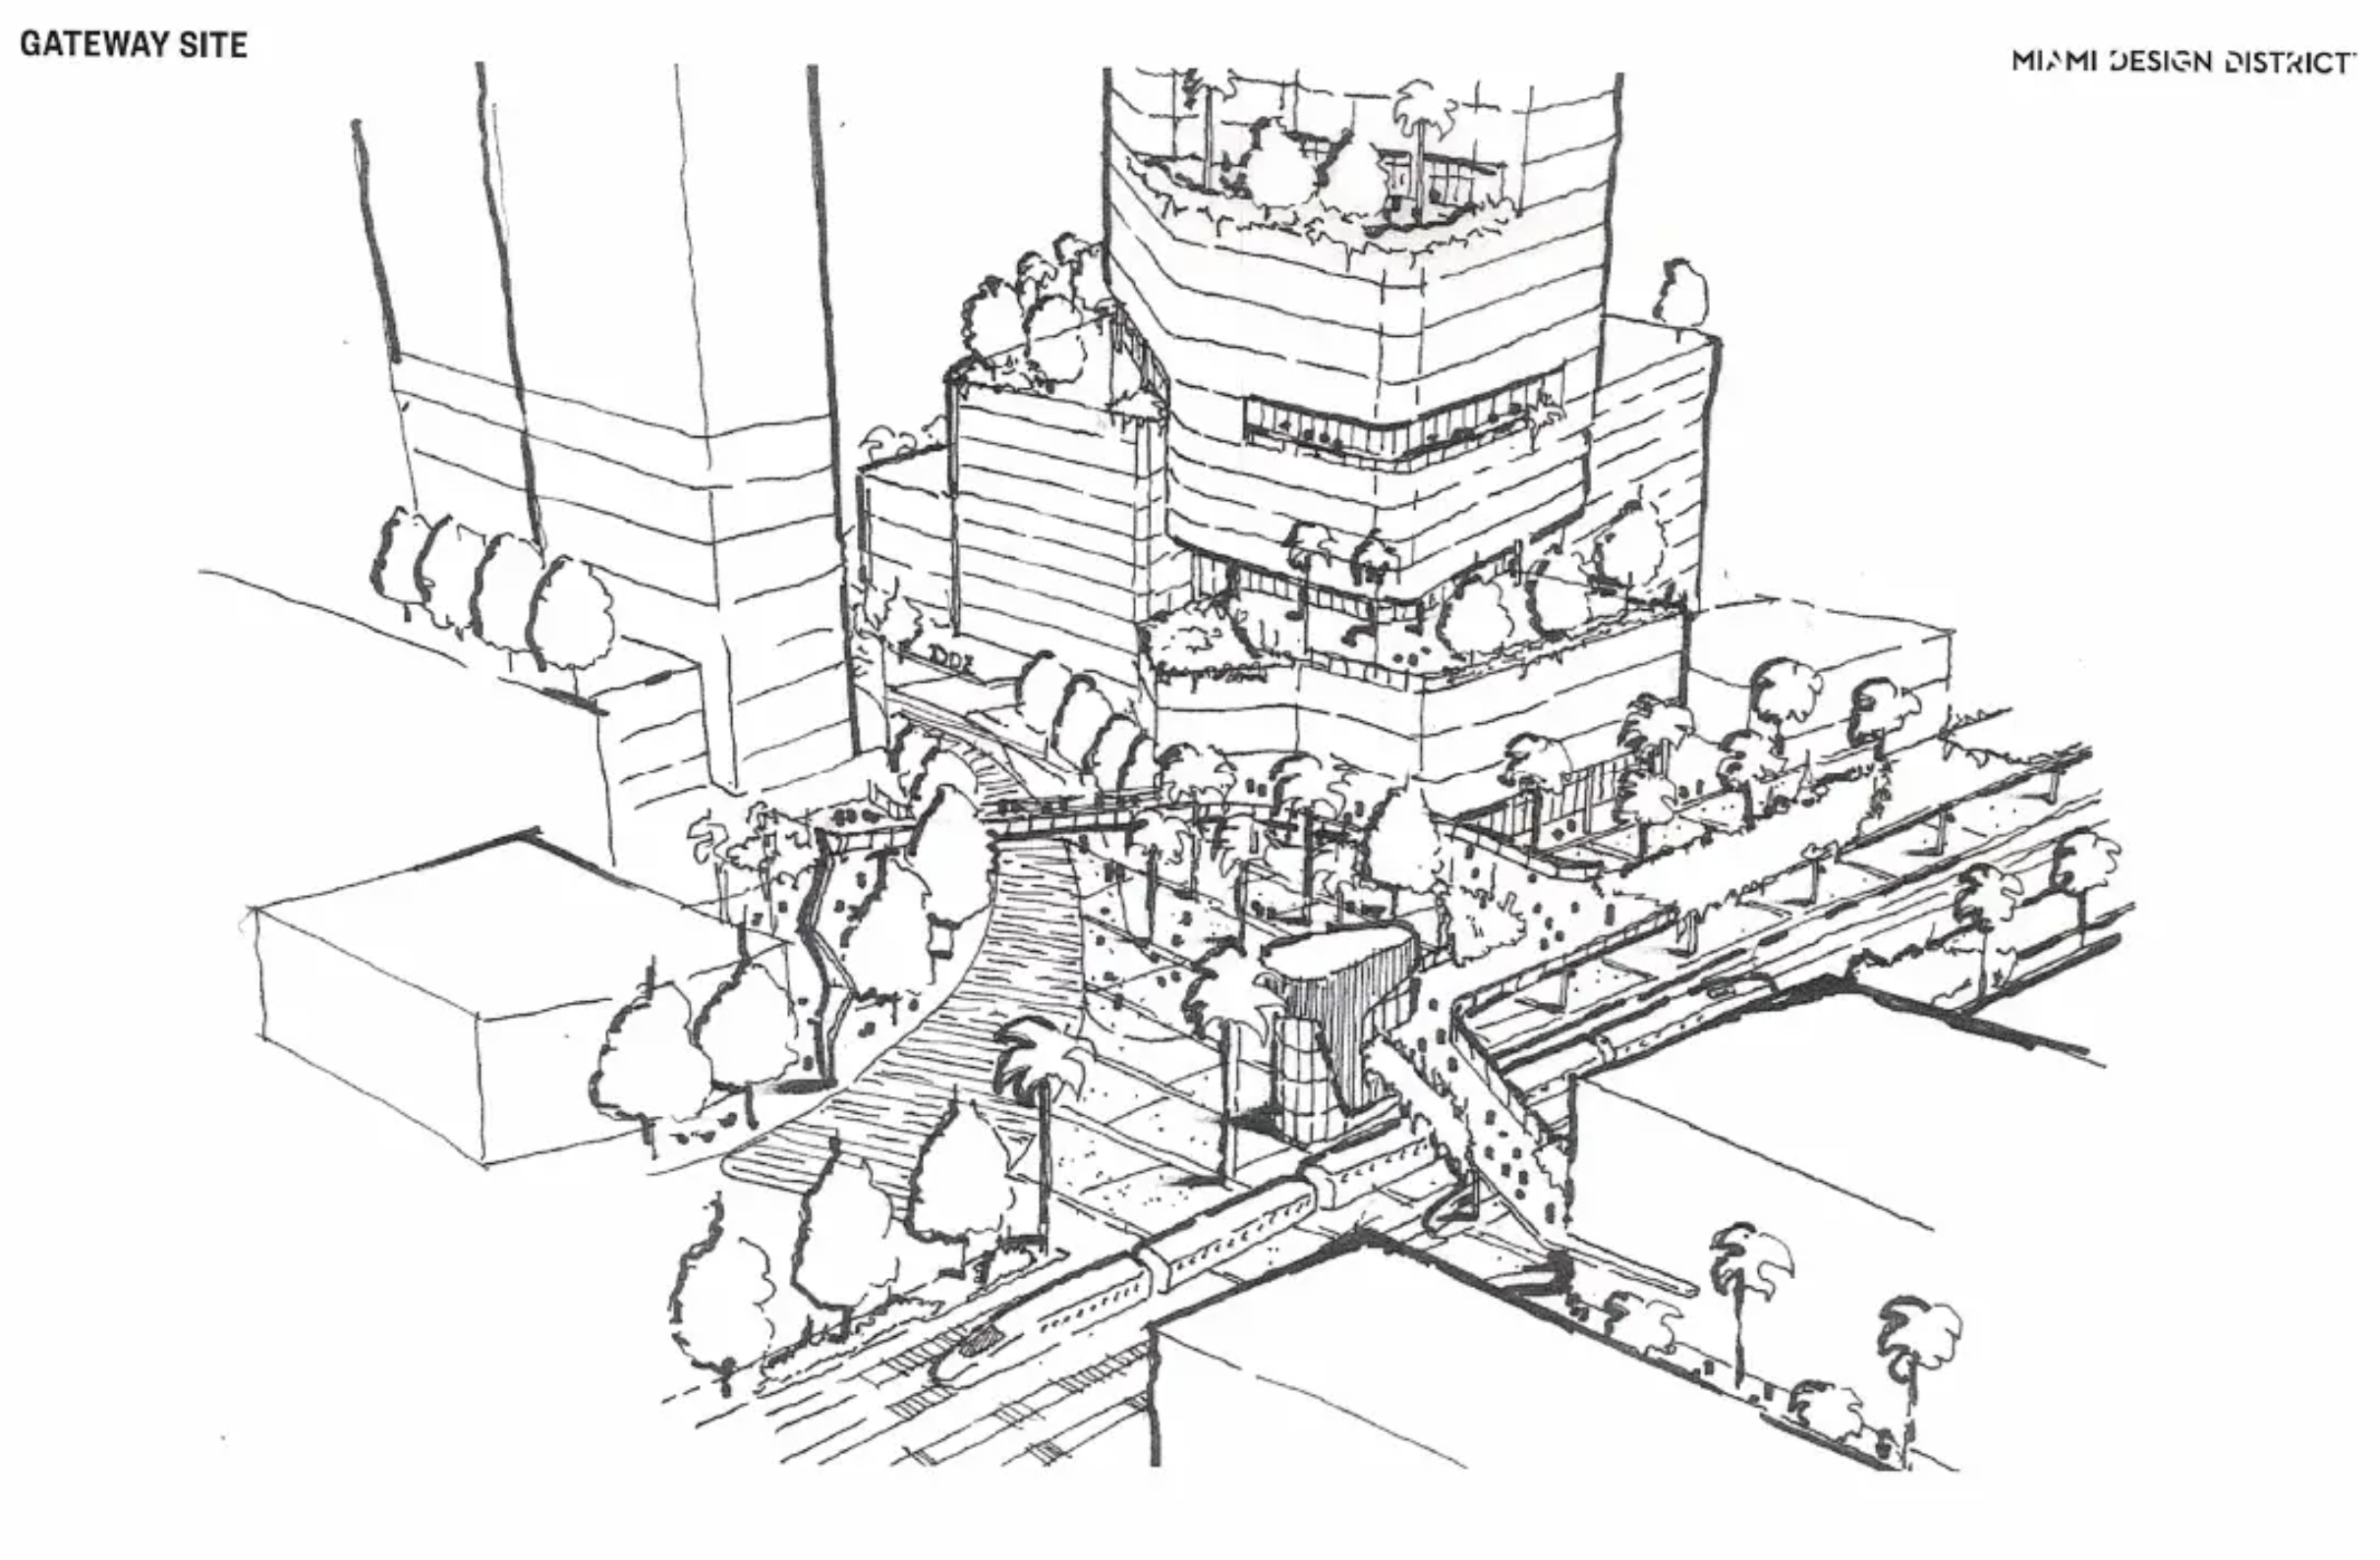 Conceptual Towers + Train Station. Courtesy of Miami Design District Associates.